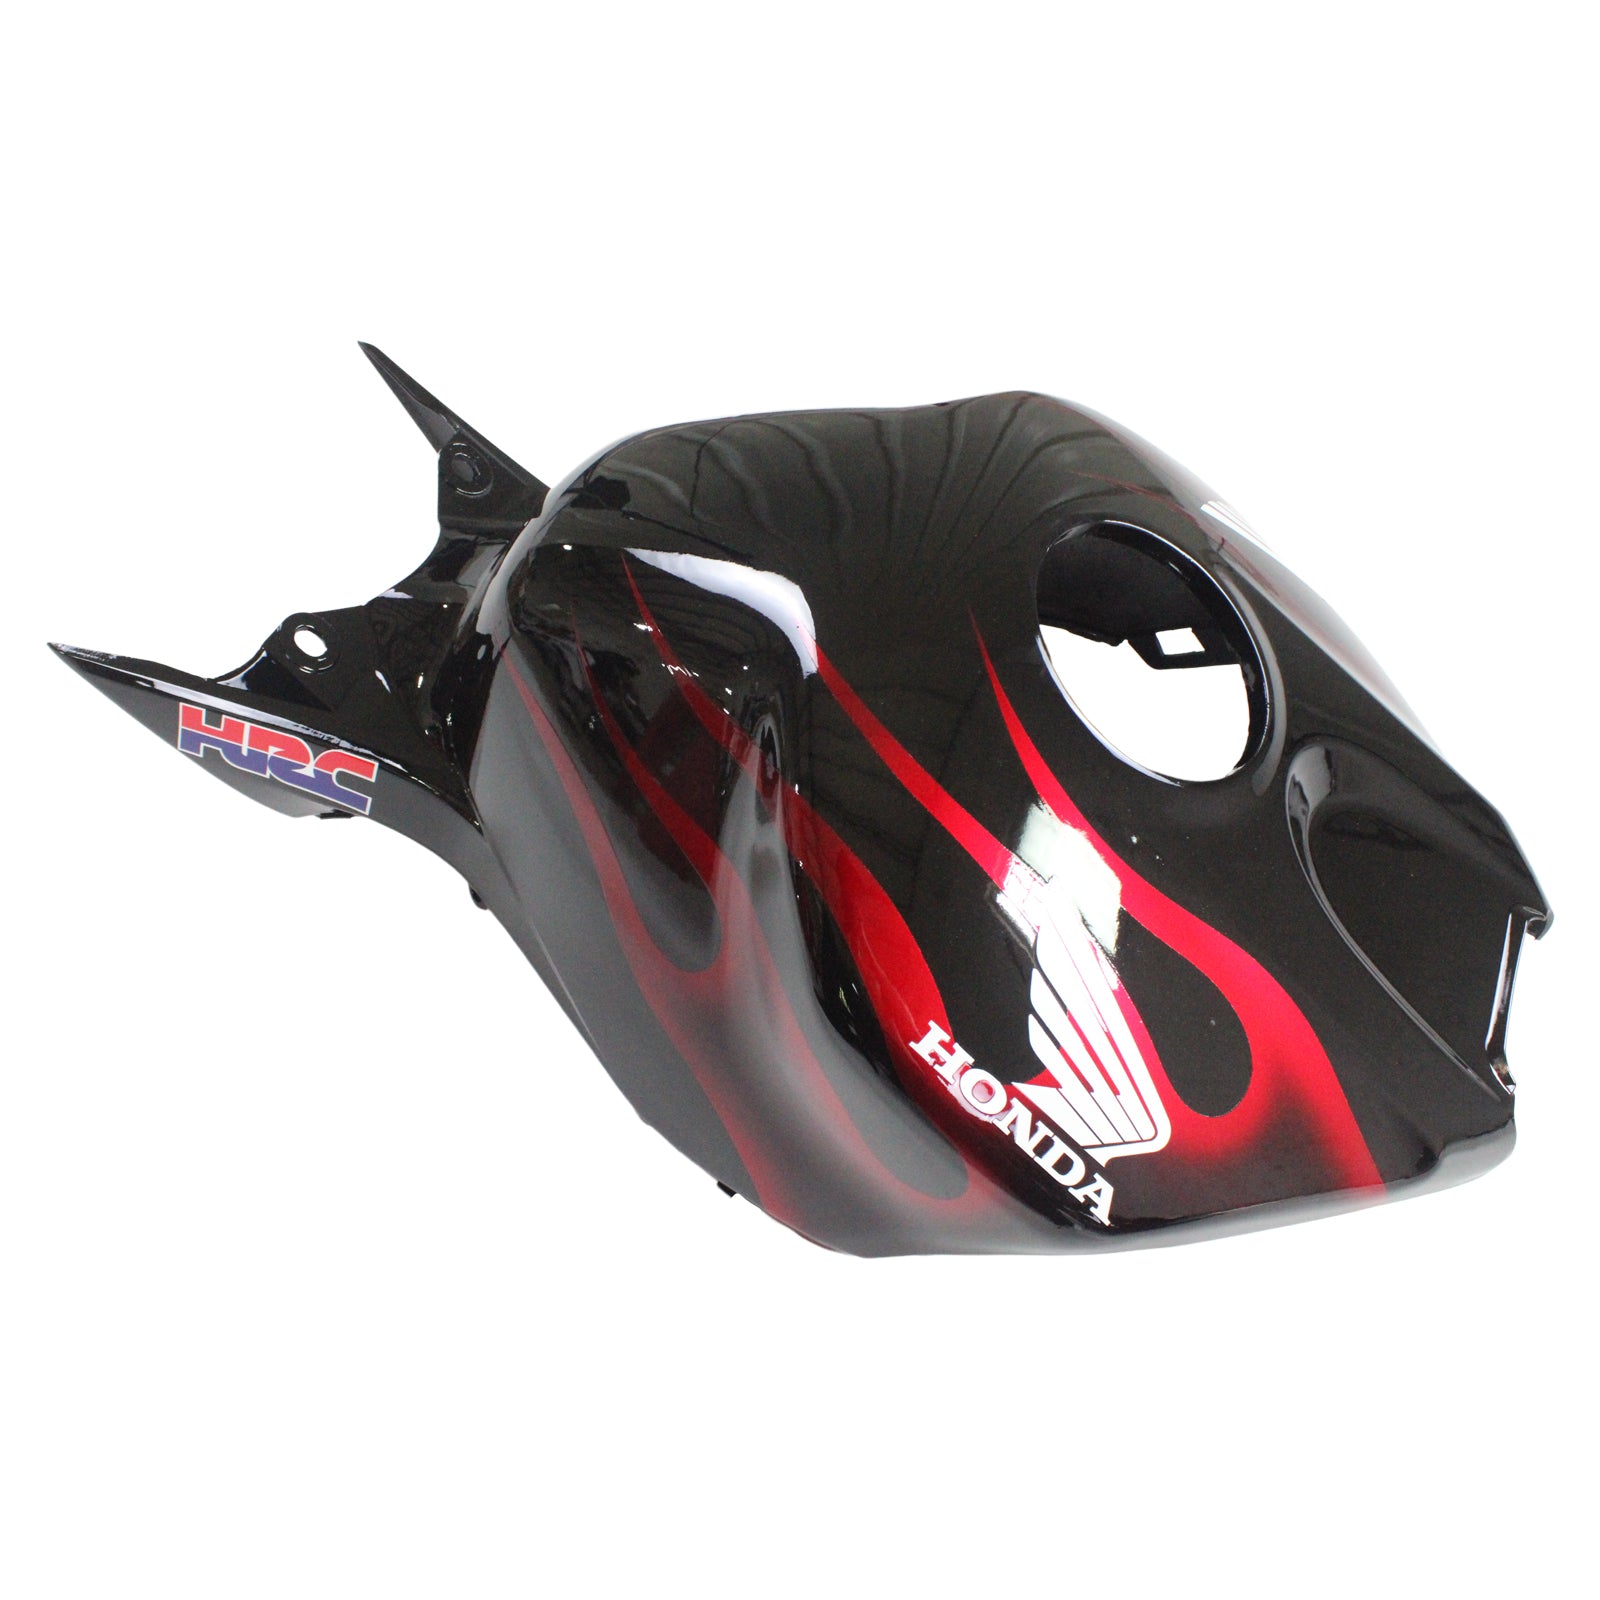 Amotopart Carene Honda CBR1000RR 2006-2007 Carena Flame Shark Racing Kit carena nera e rossa